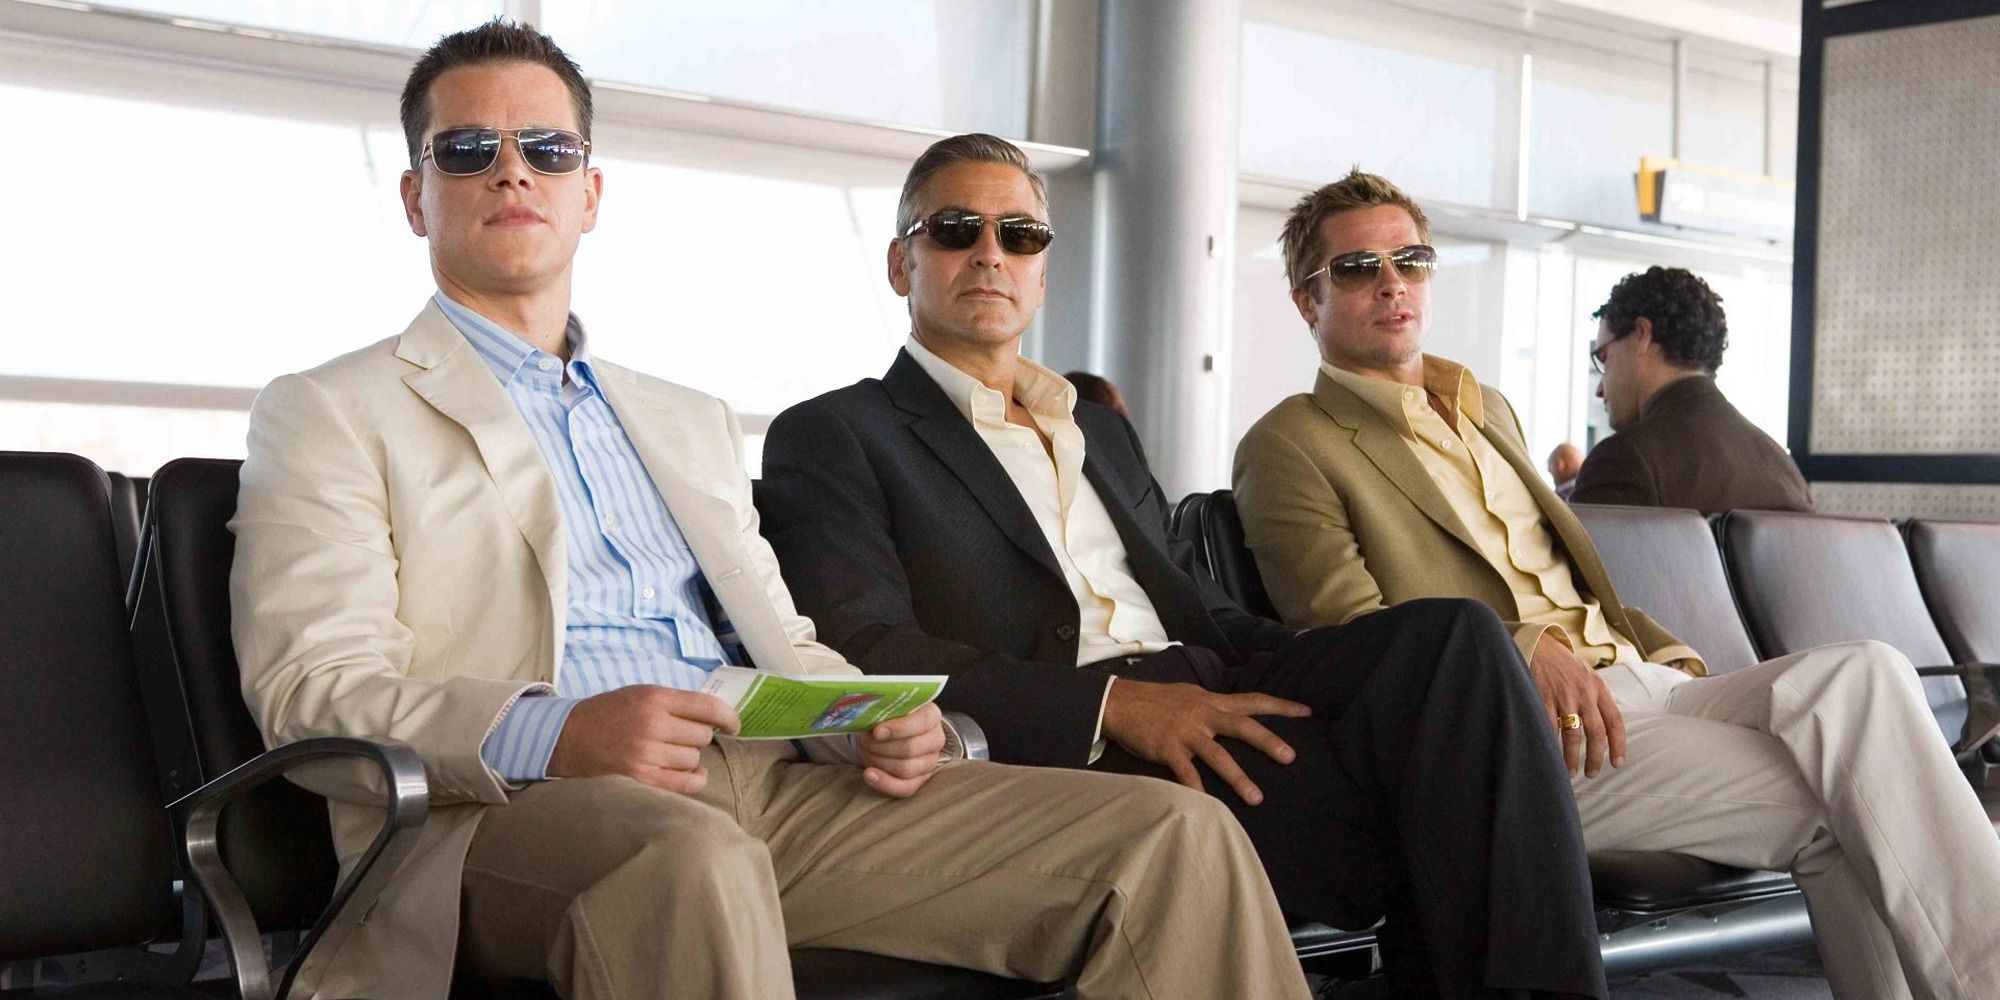 Matt Damon, George Clooney and Brad Pitt in 'Ocean's Thirteen' sitting at an airport with sunglasses on